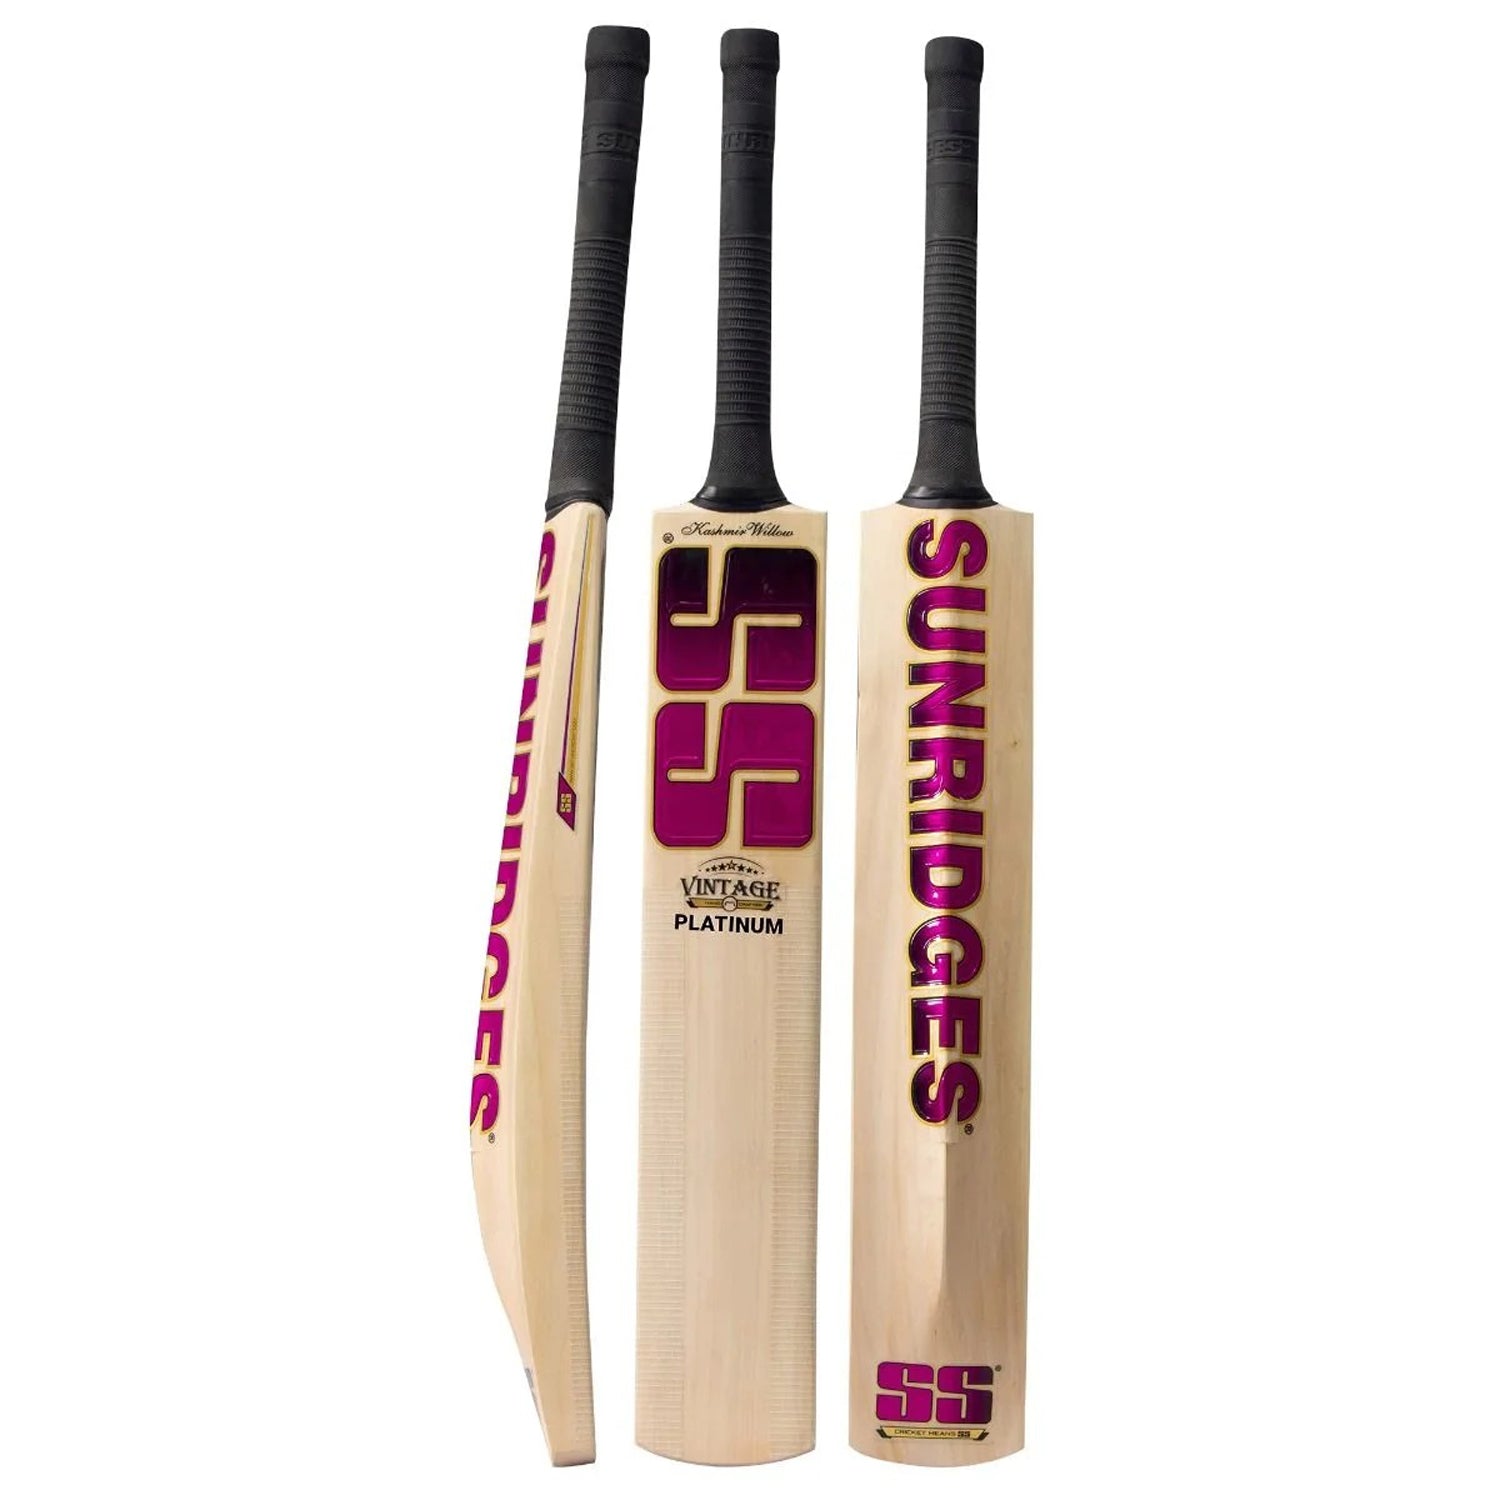 SS VA-900 Solitaire Retro Classic Kashmir Willow Cricket Bat - Best Price online Prokicksports.com